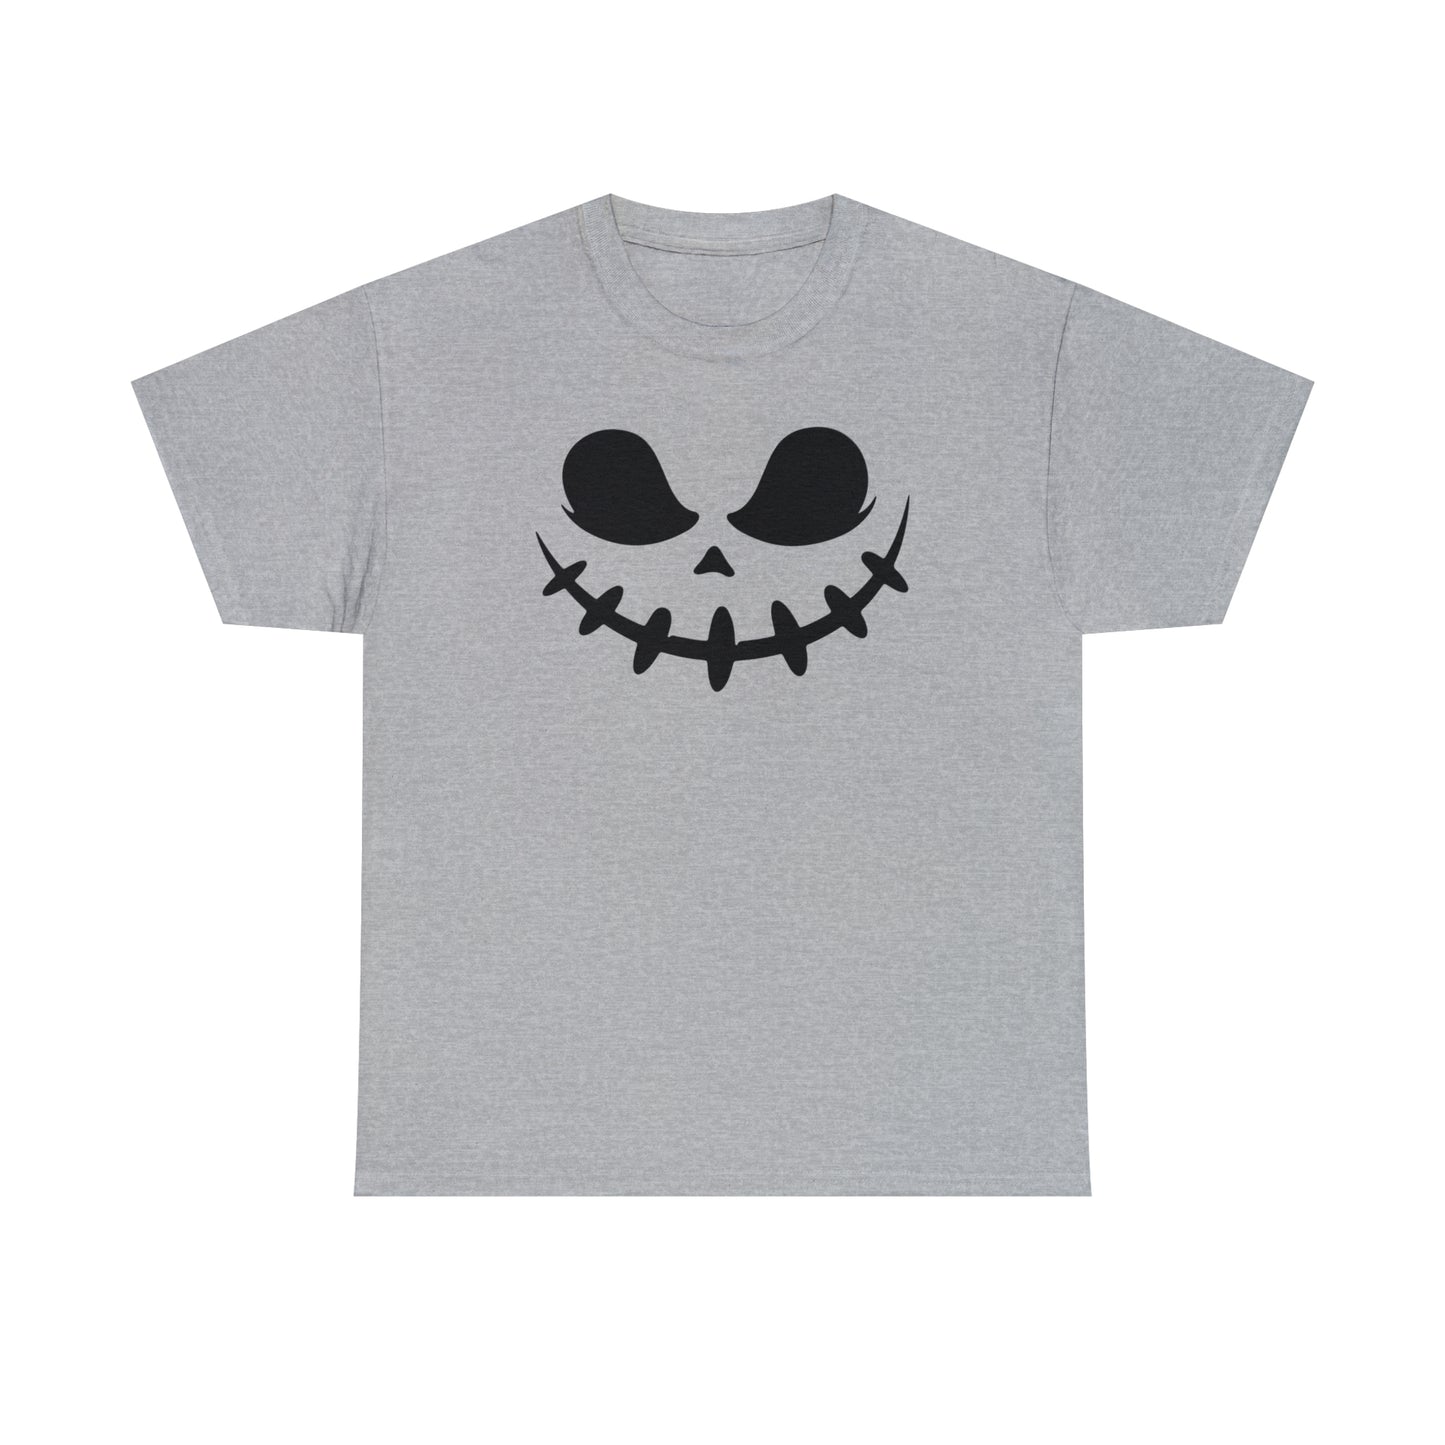 Pumpkin Face T-Shirt For Halloween T Shirt For Jack O Lantern TShirt For All Hallows Eve Costume Shirt